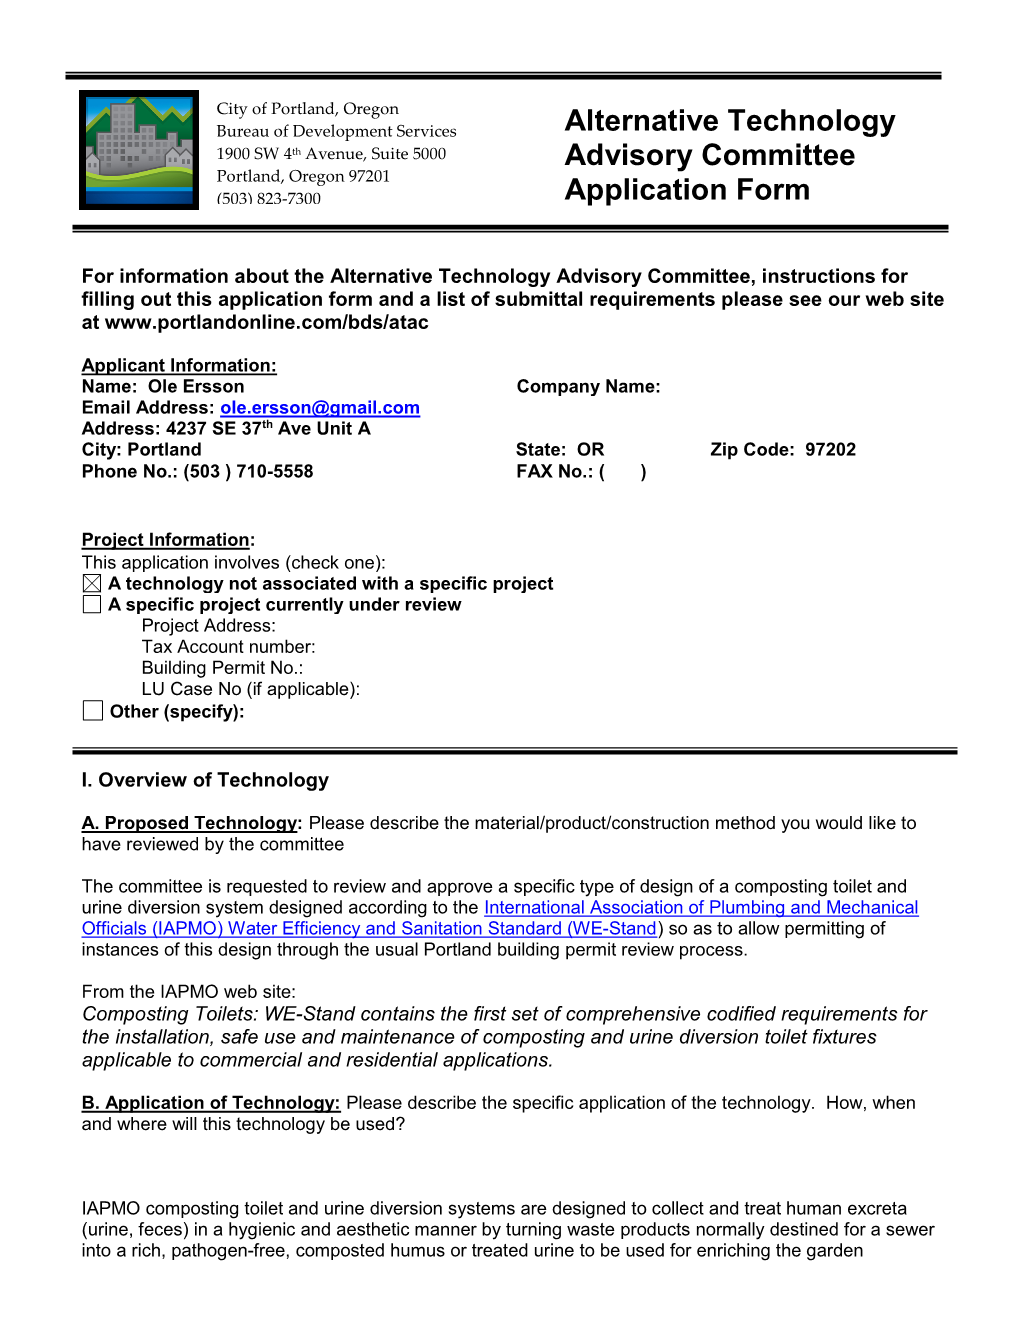 Alternative Technology Advisory Committee Application Form